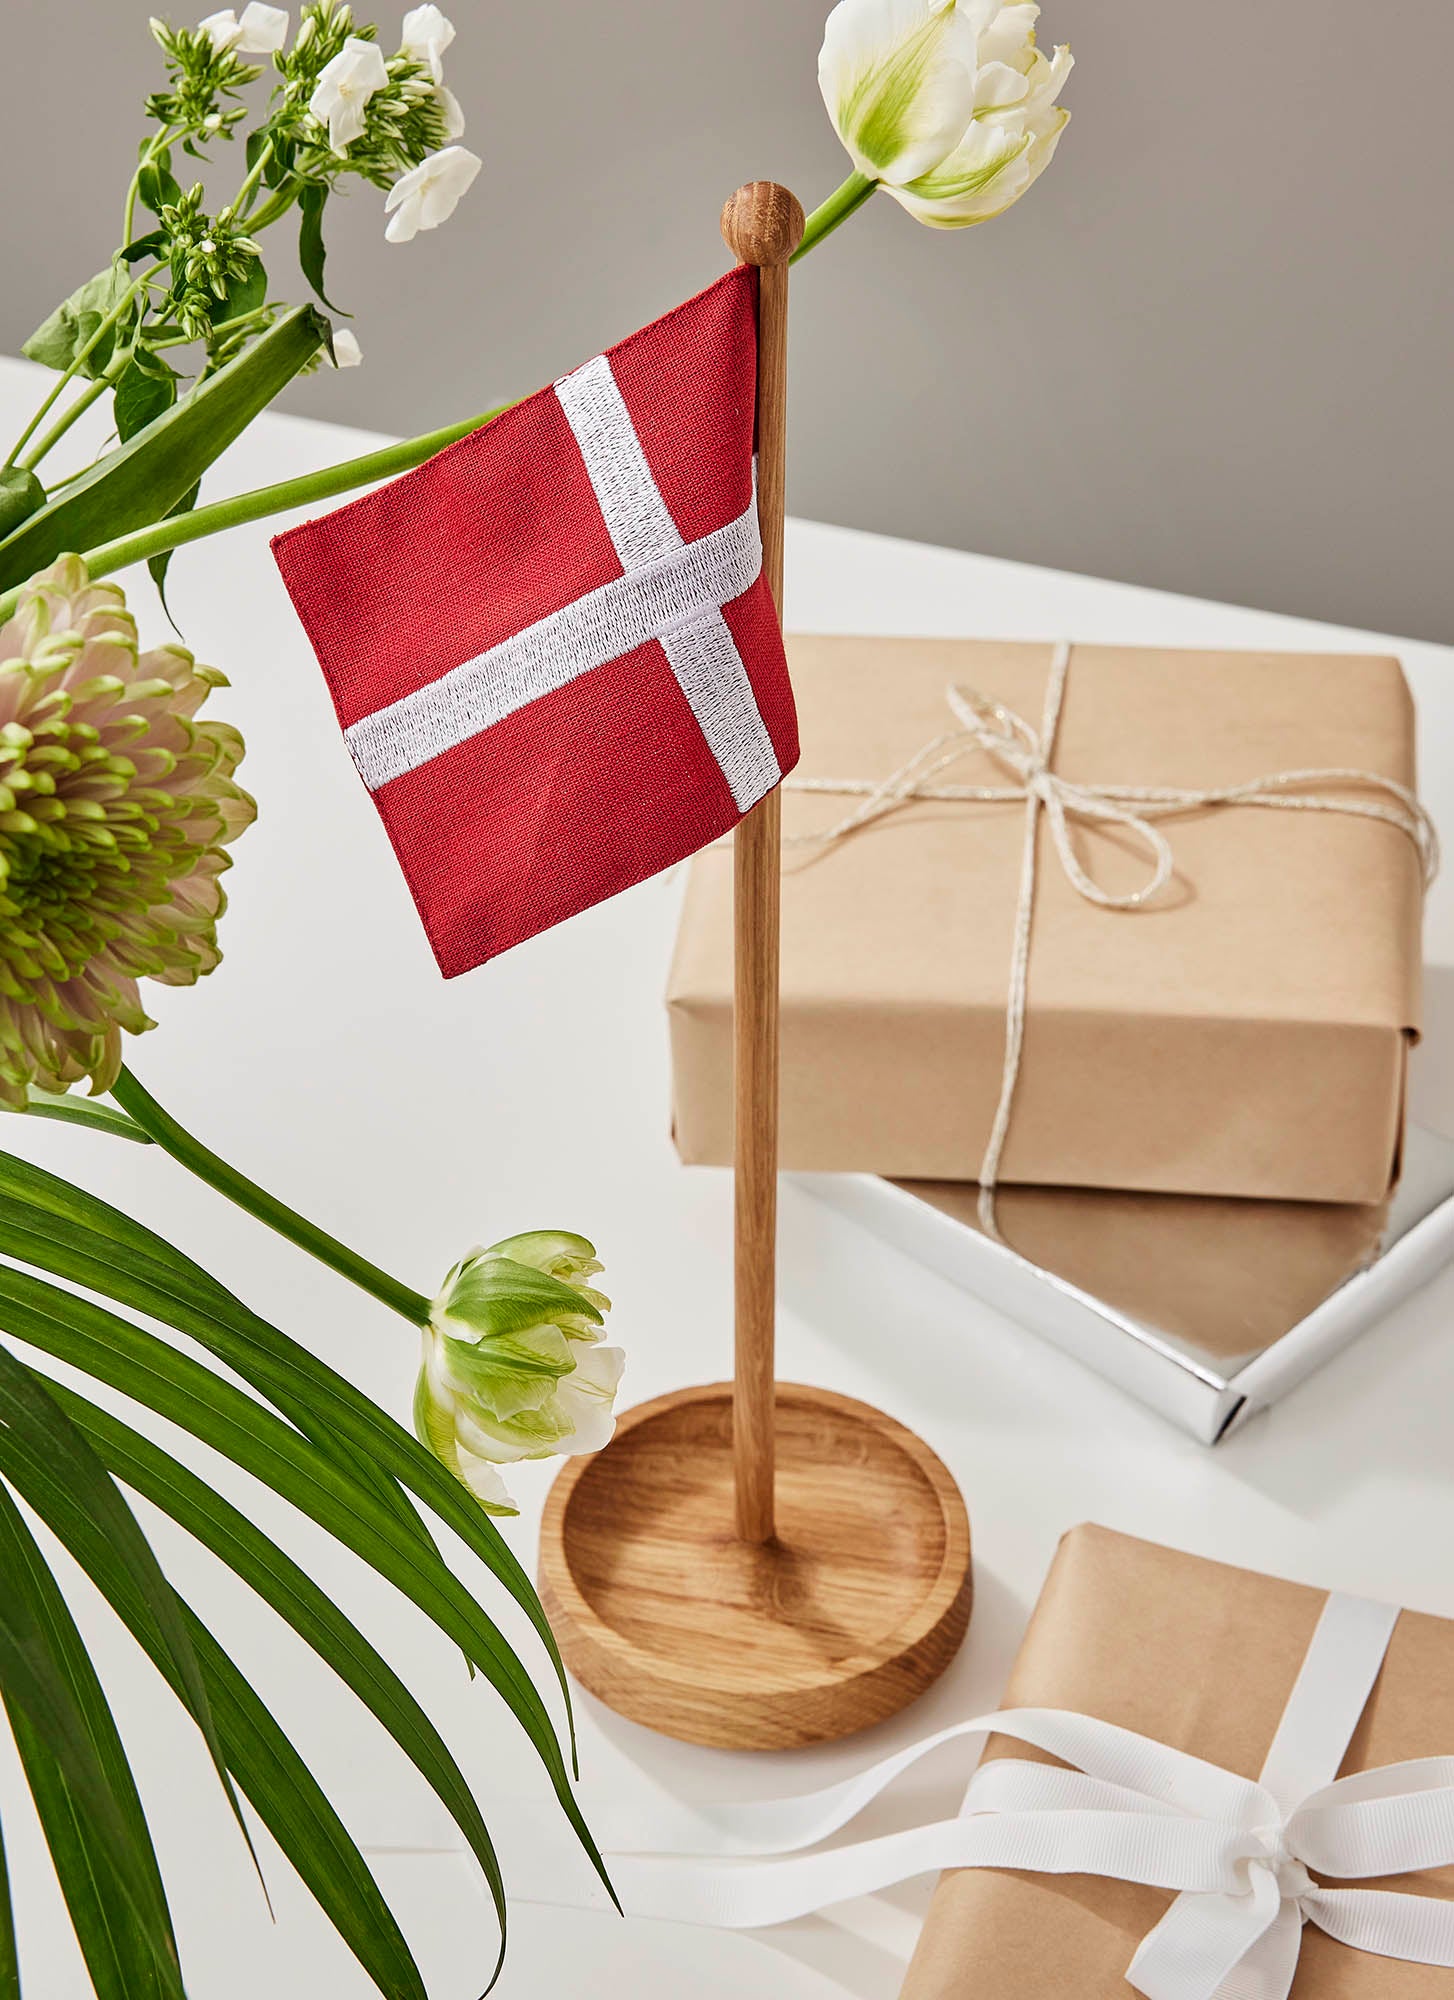 Bordflagget (Dansk)